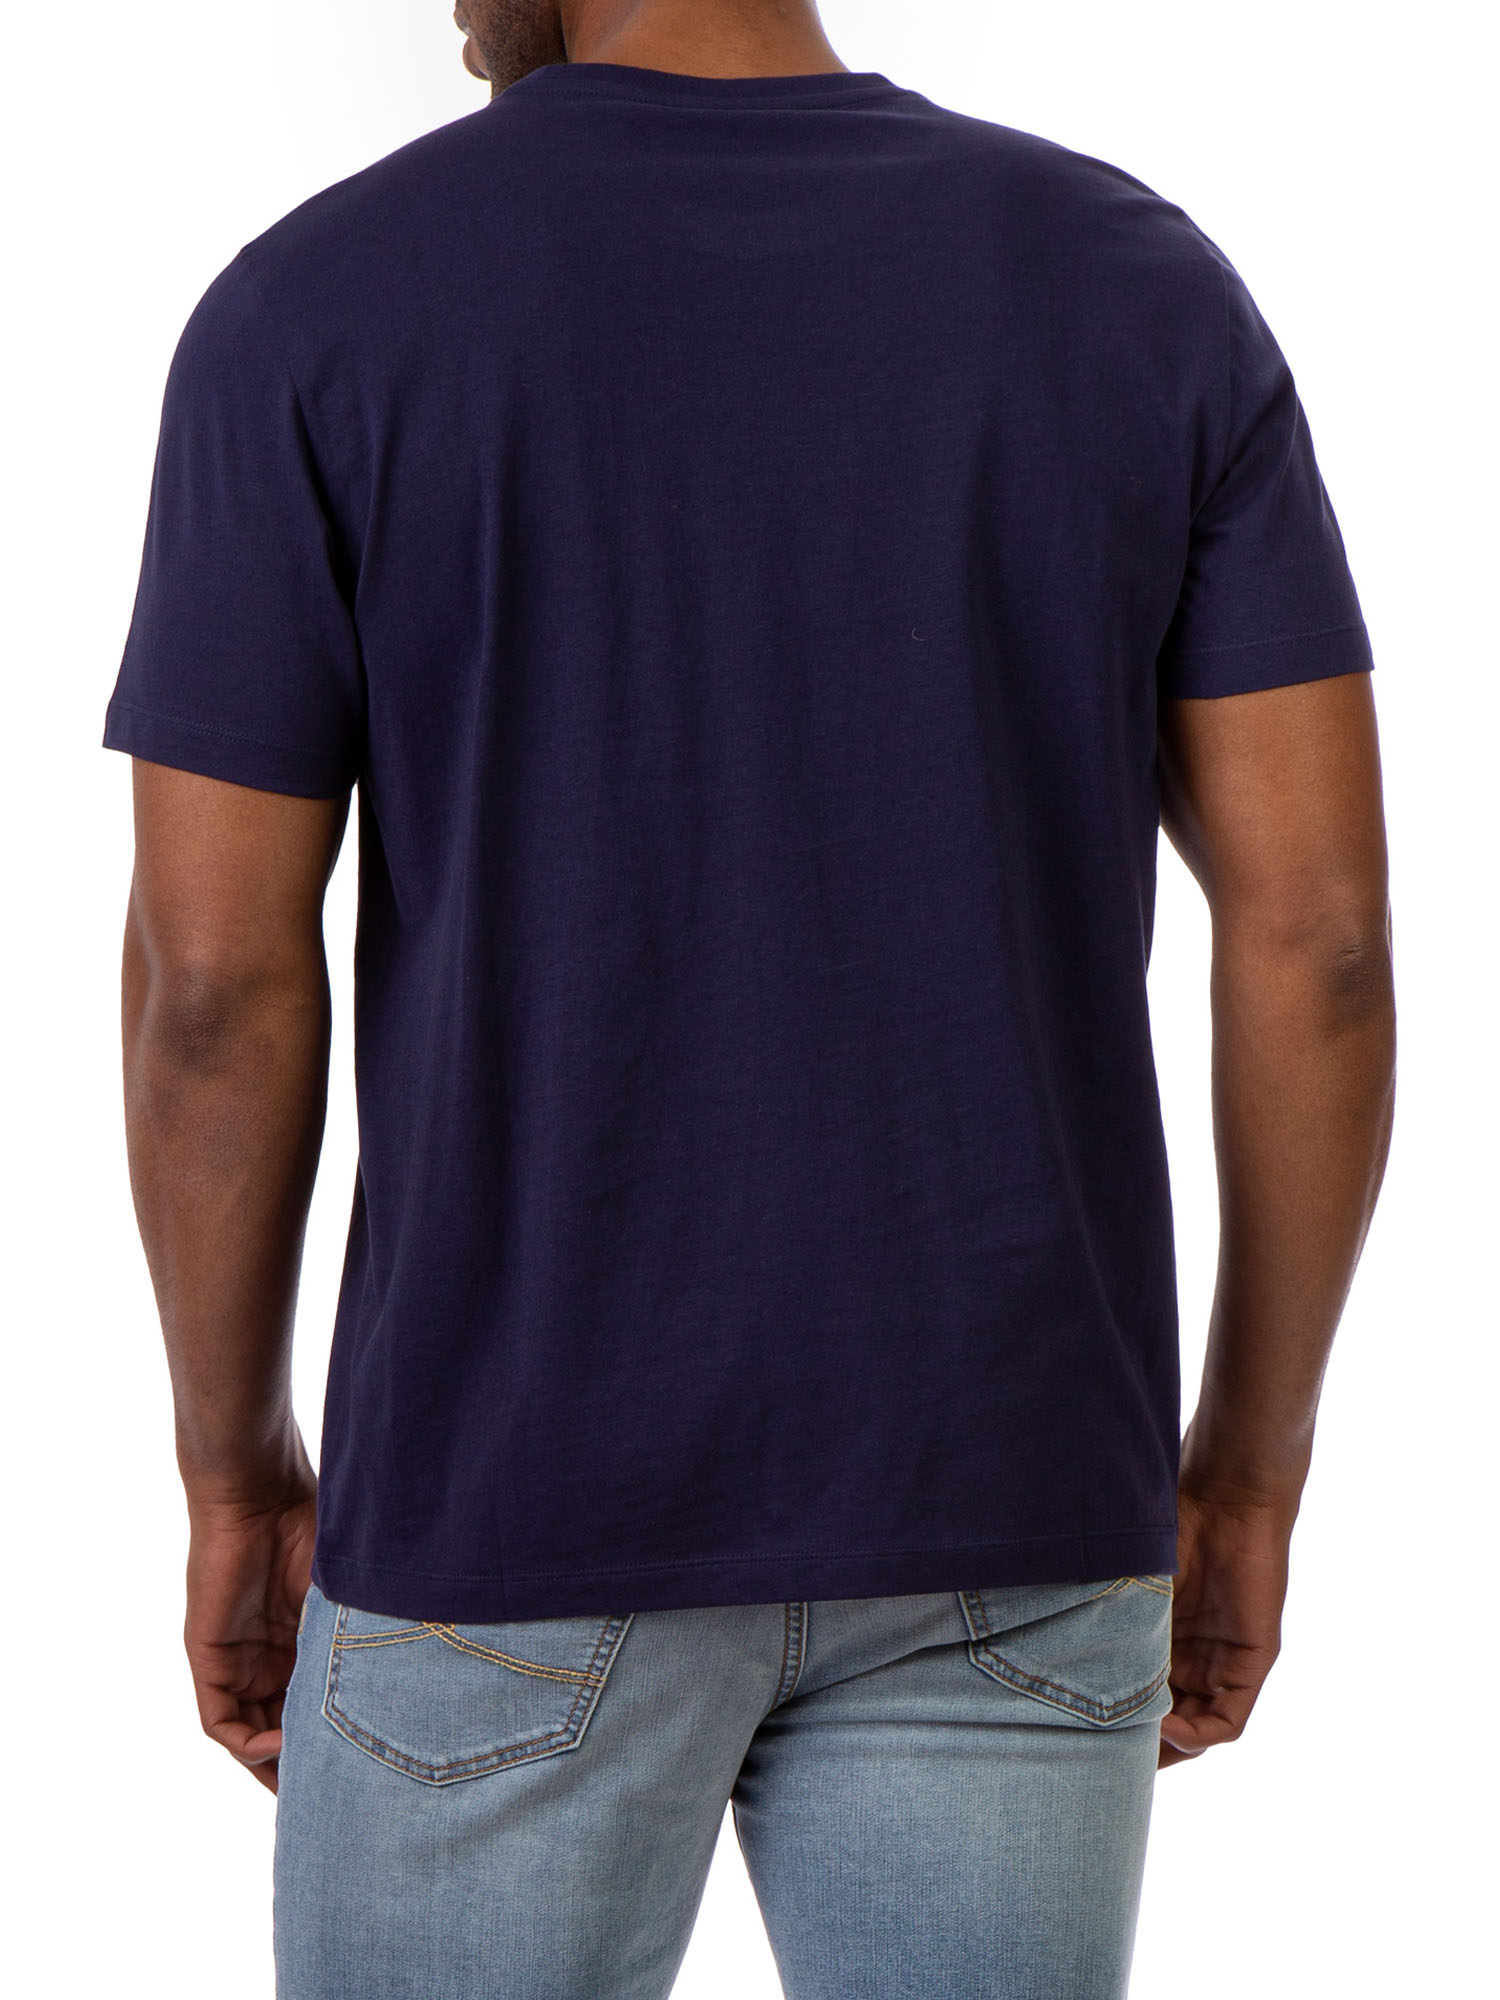 U.S. Polo Assn. Men's Short Sleeve Printed T-Shirt - image 3 of 5